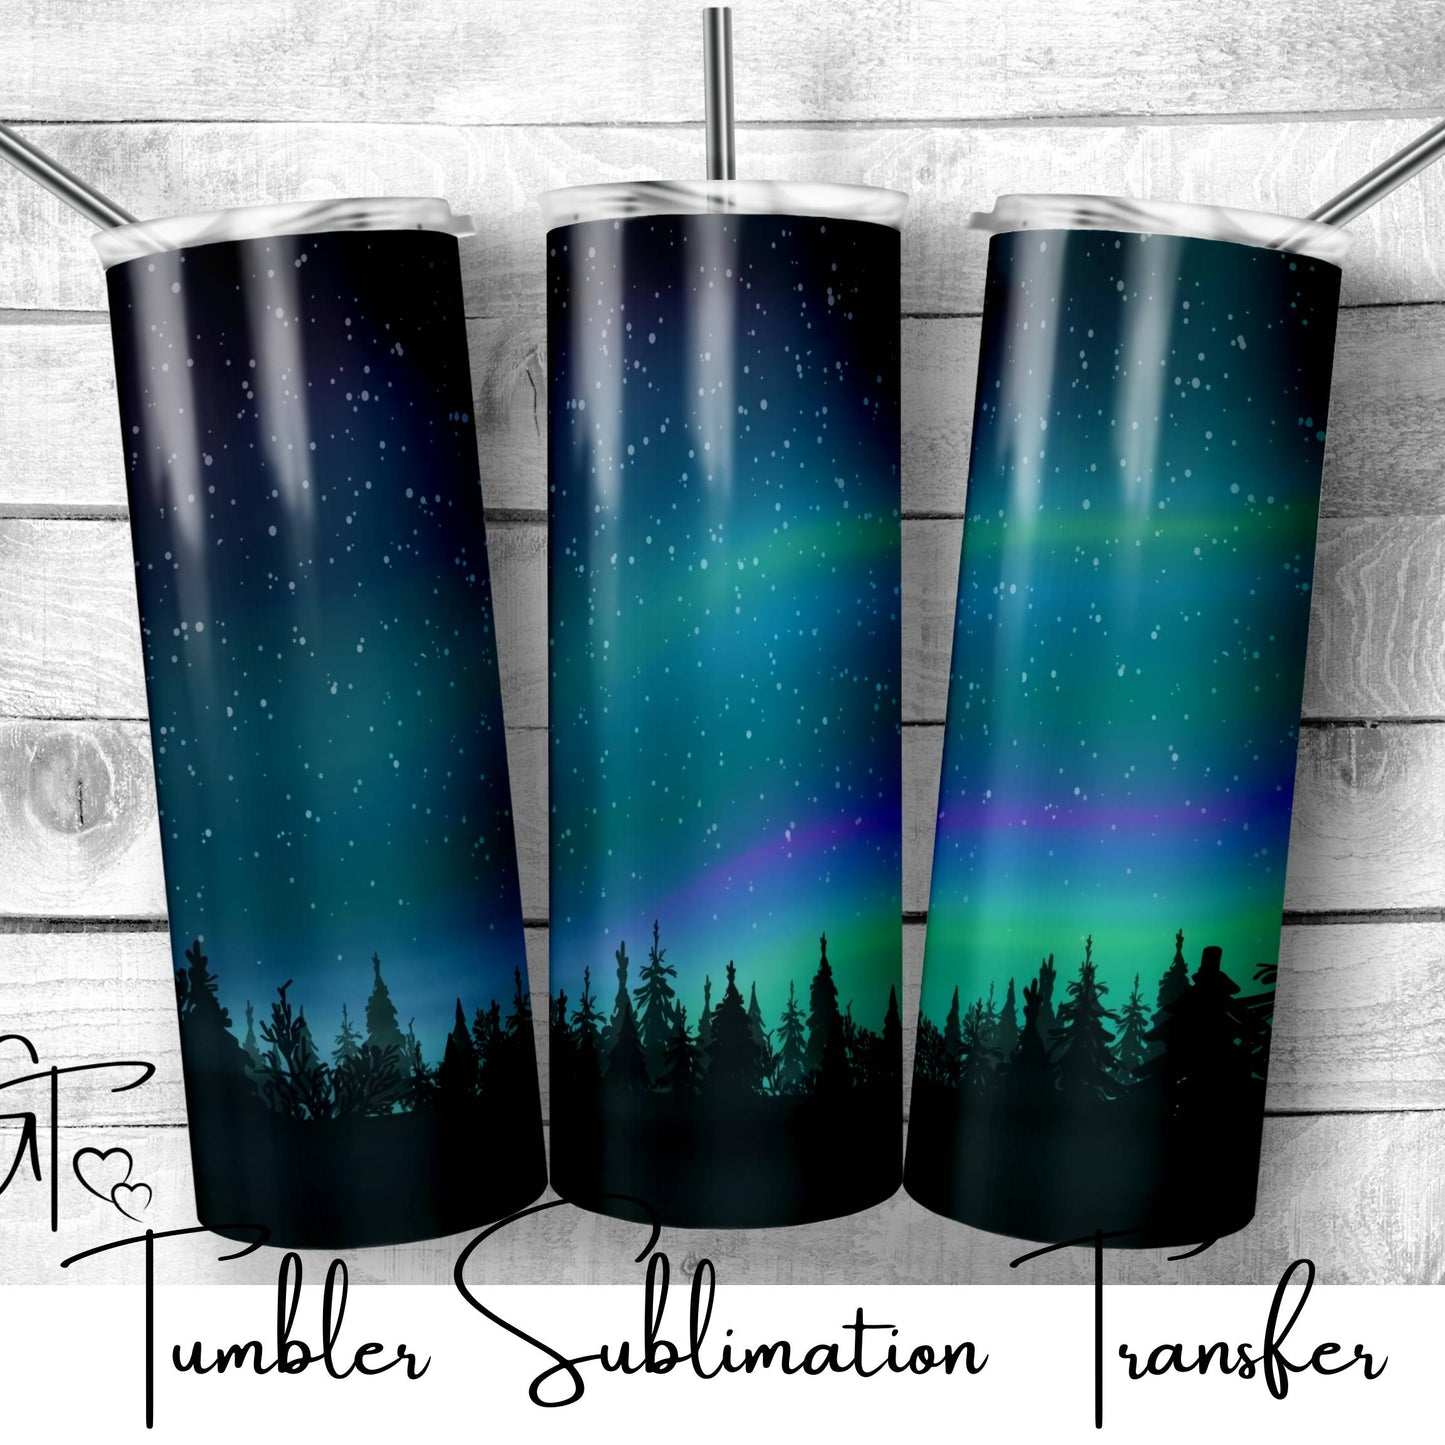 SUB463 Northern lights (aurora borealis) Camping Tumbler Sublimation Transfer